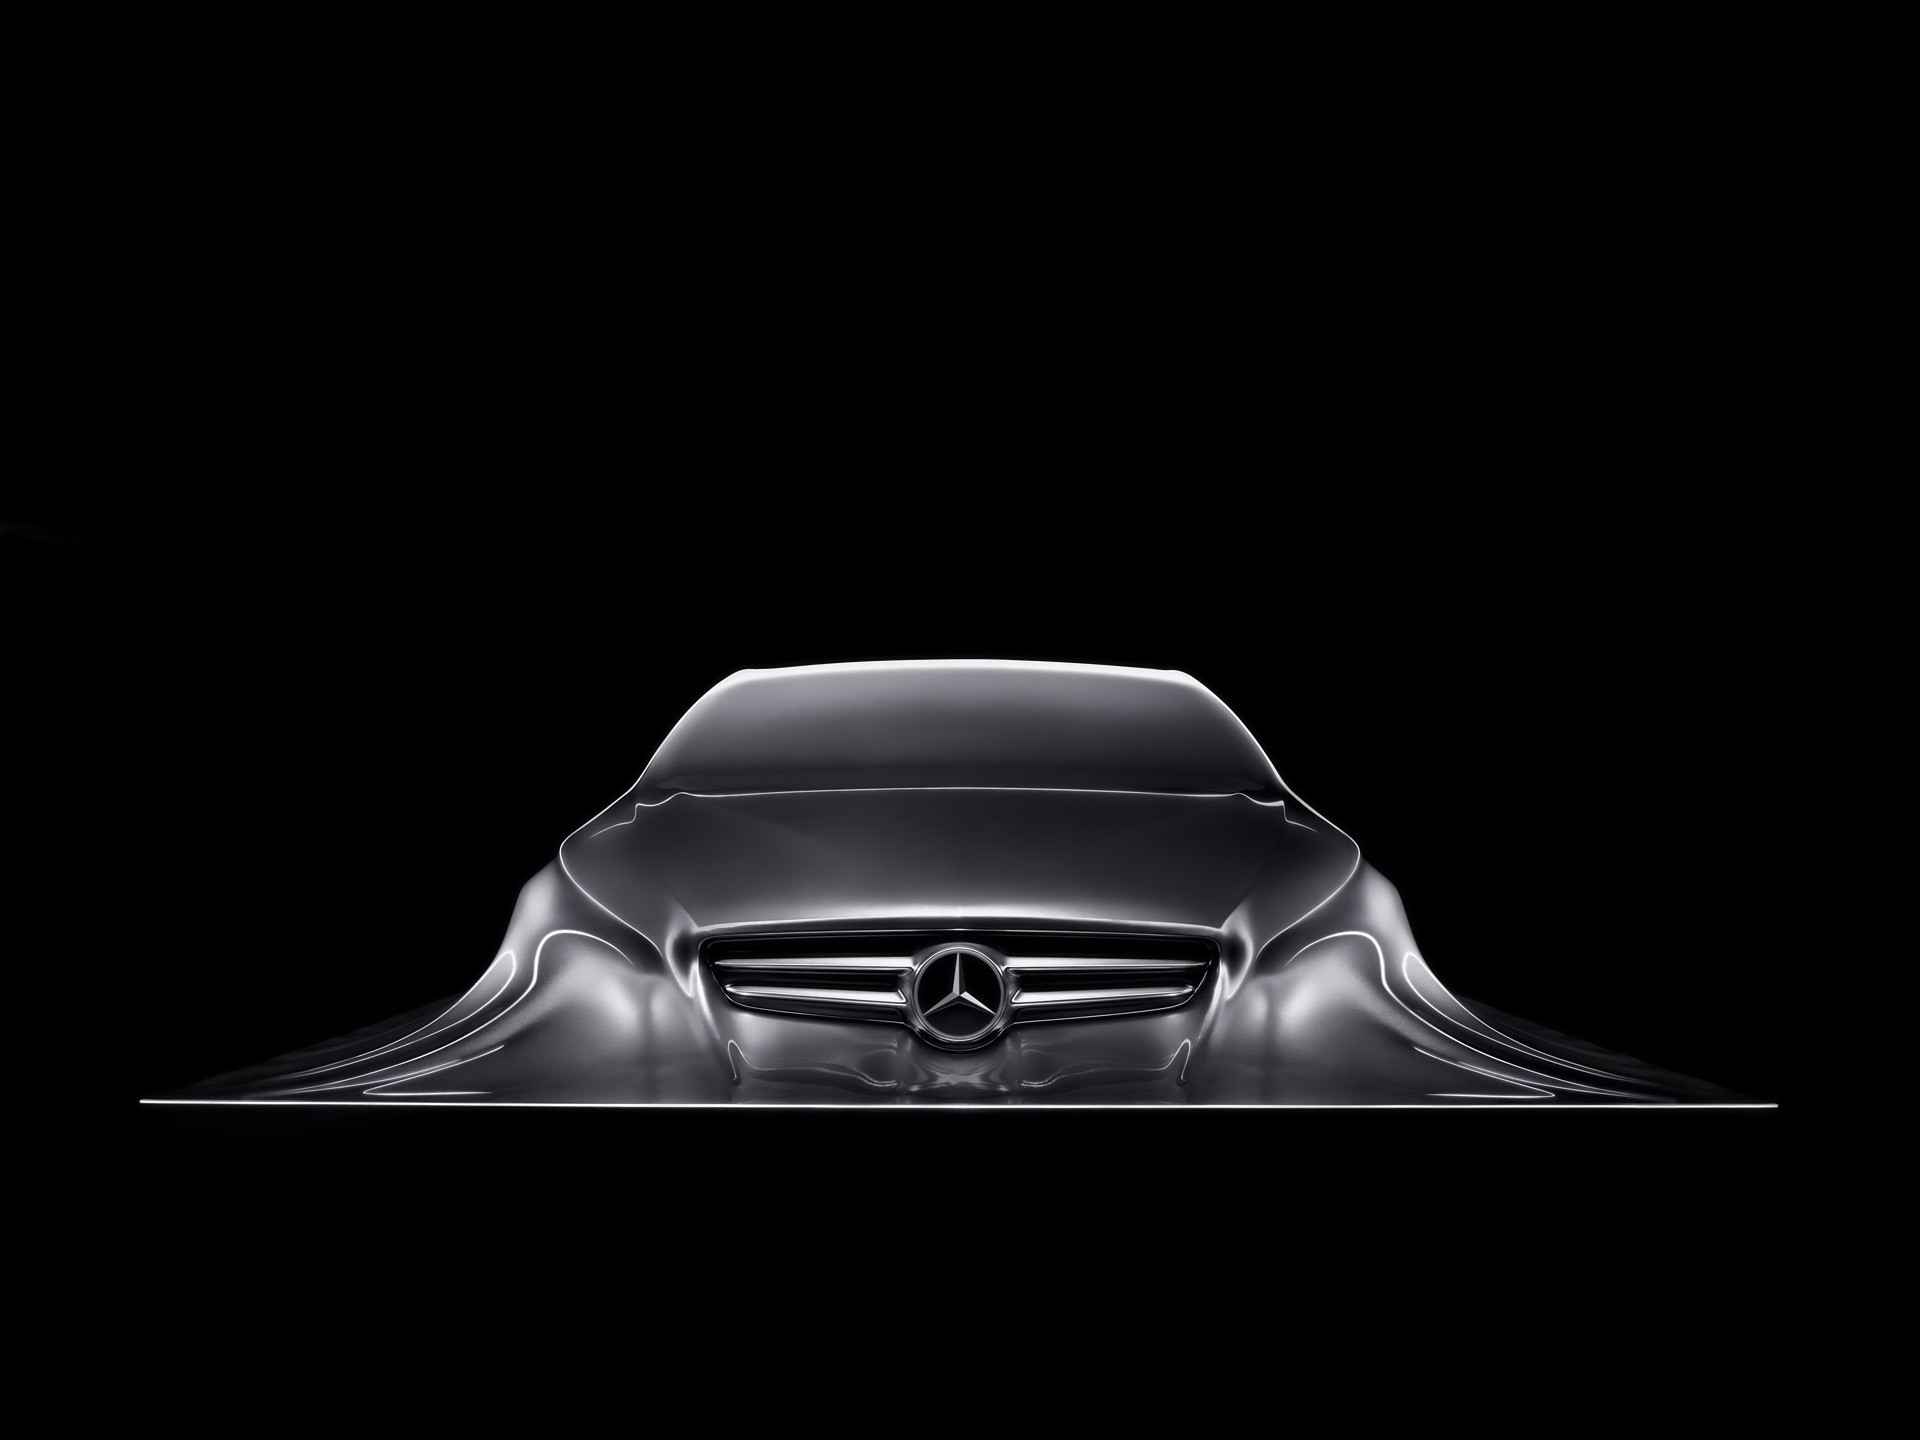 50+] Mercedes Benz Logo Wallpapers - WallpaperSafari